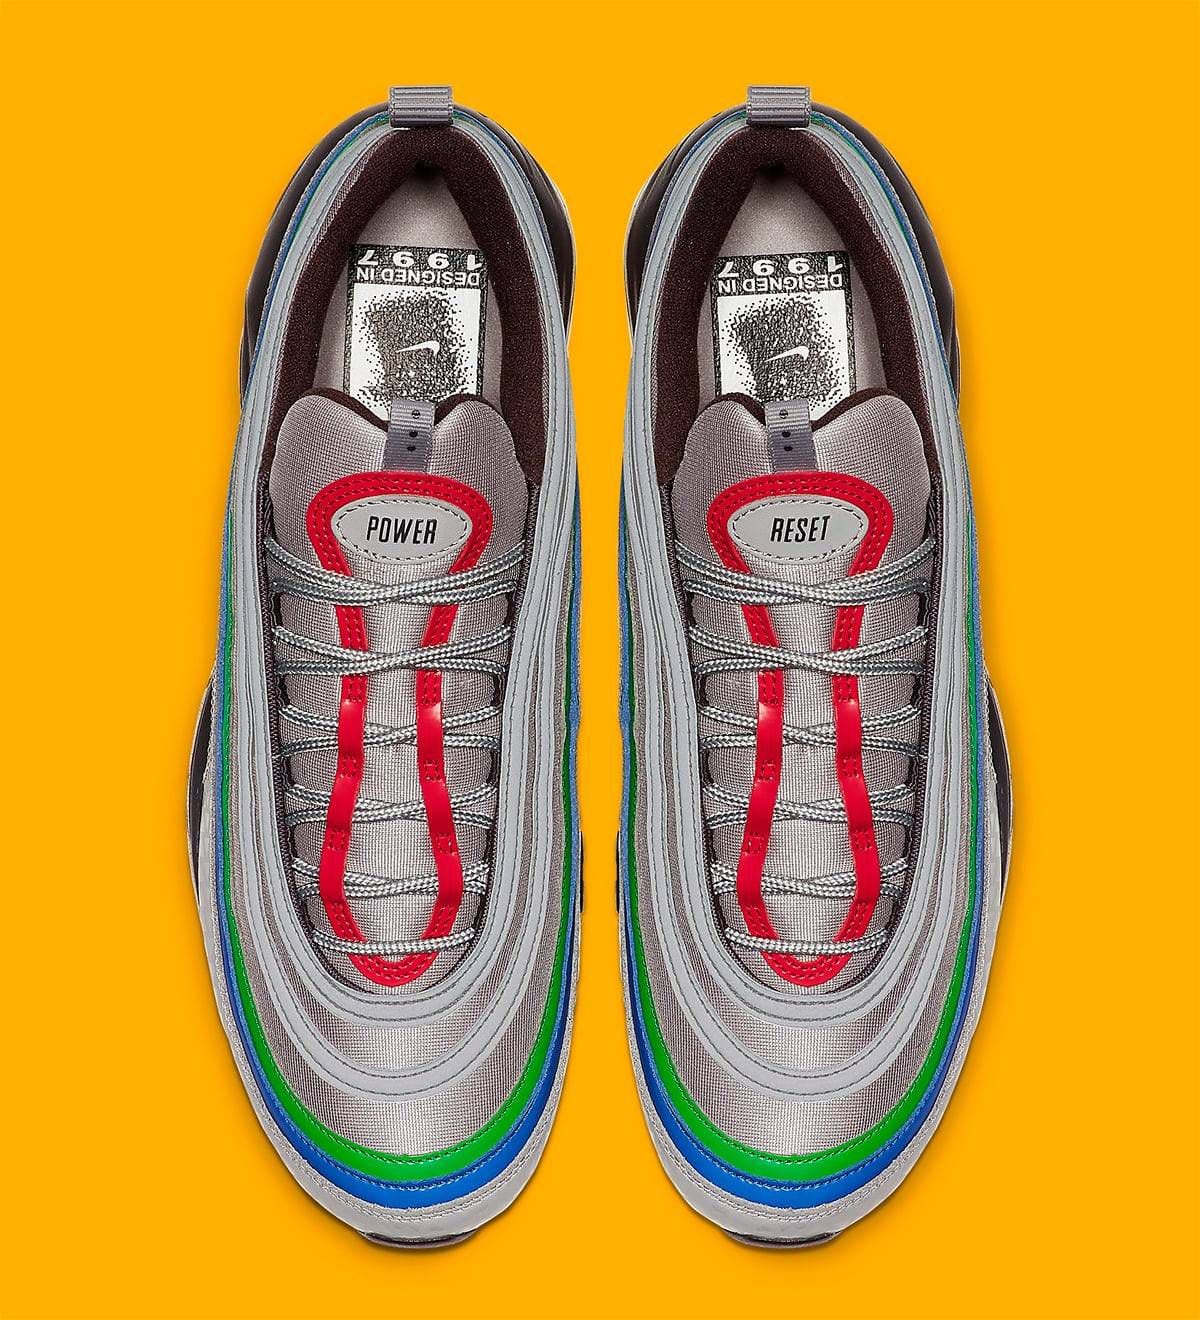 Las Air Max 97 inspiradas en la Nintendo 64 son la nostalgia hecha sneaker